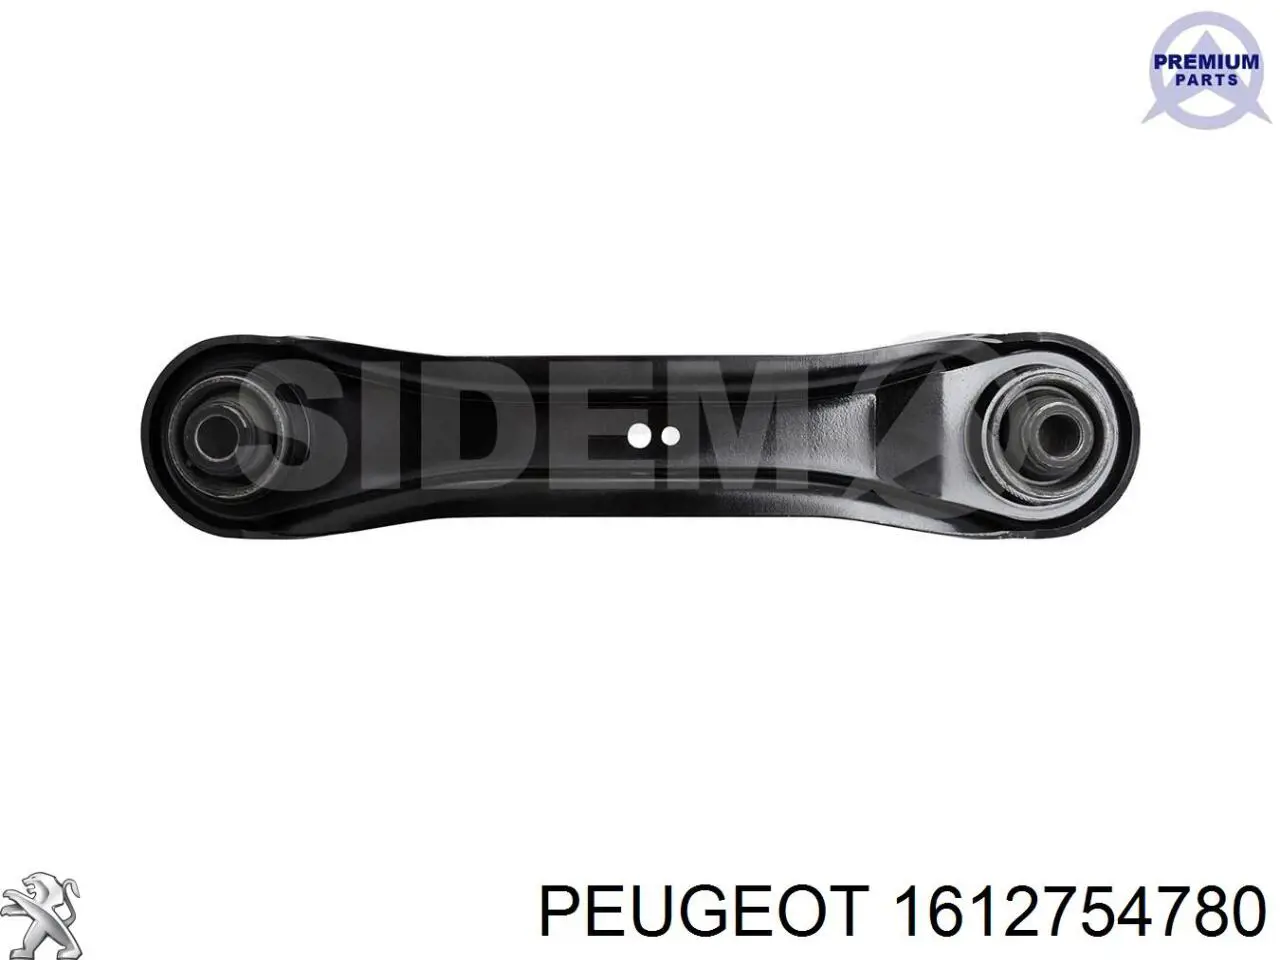 1612754780 Peugeot/Citroen barra transversal de suspensão traseira